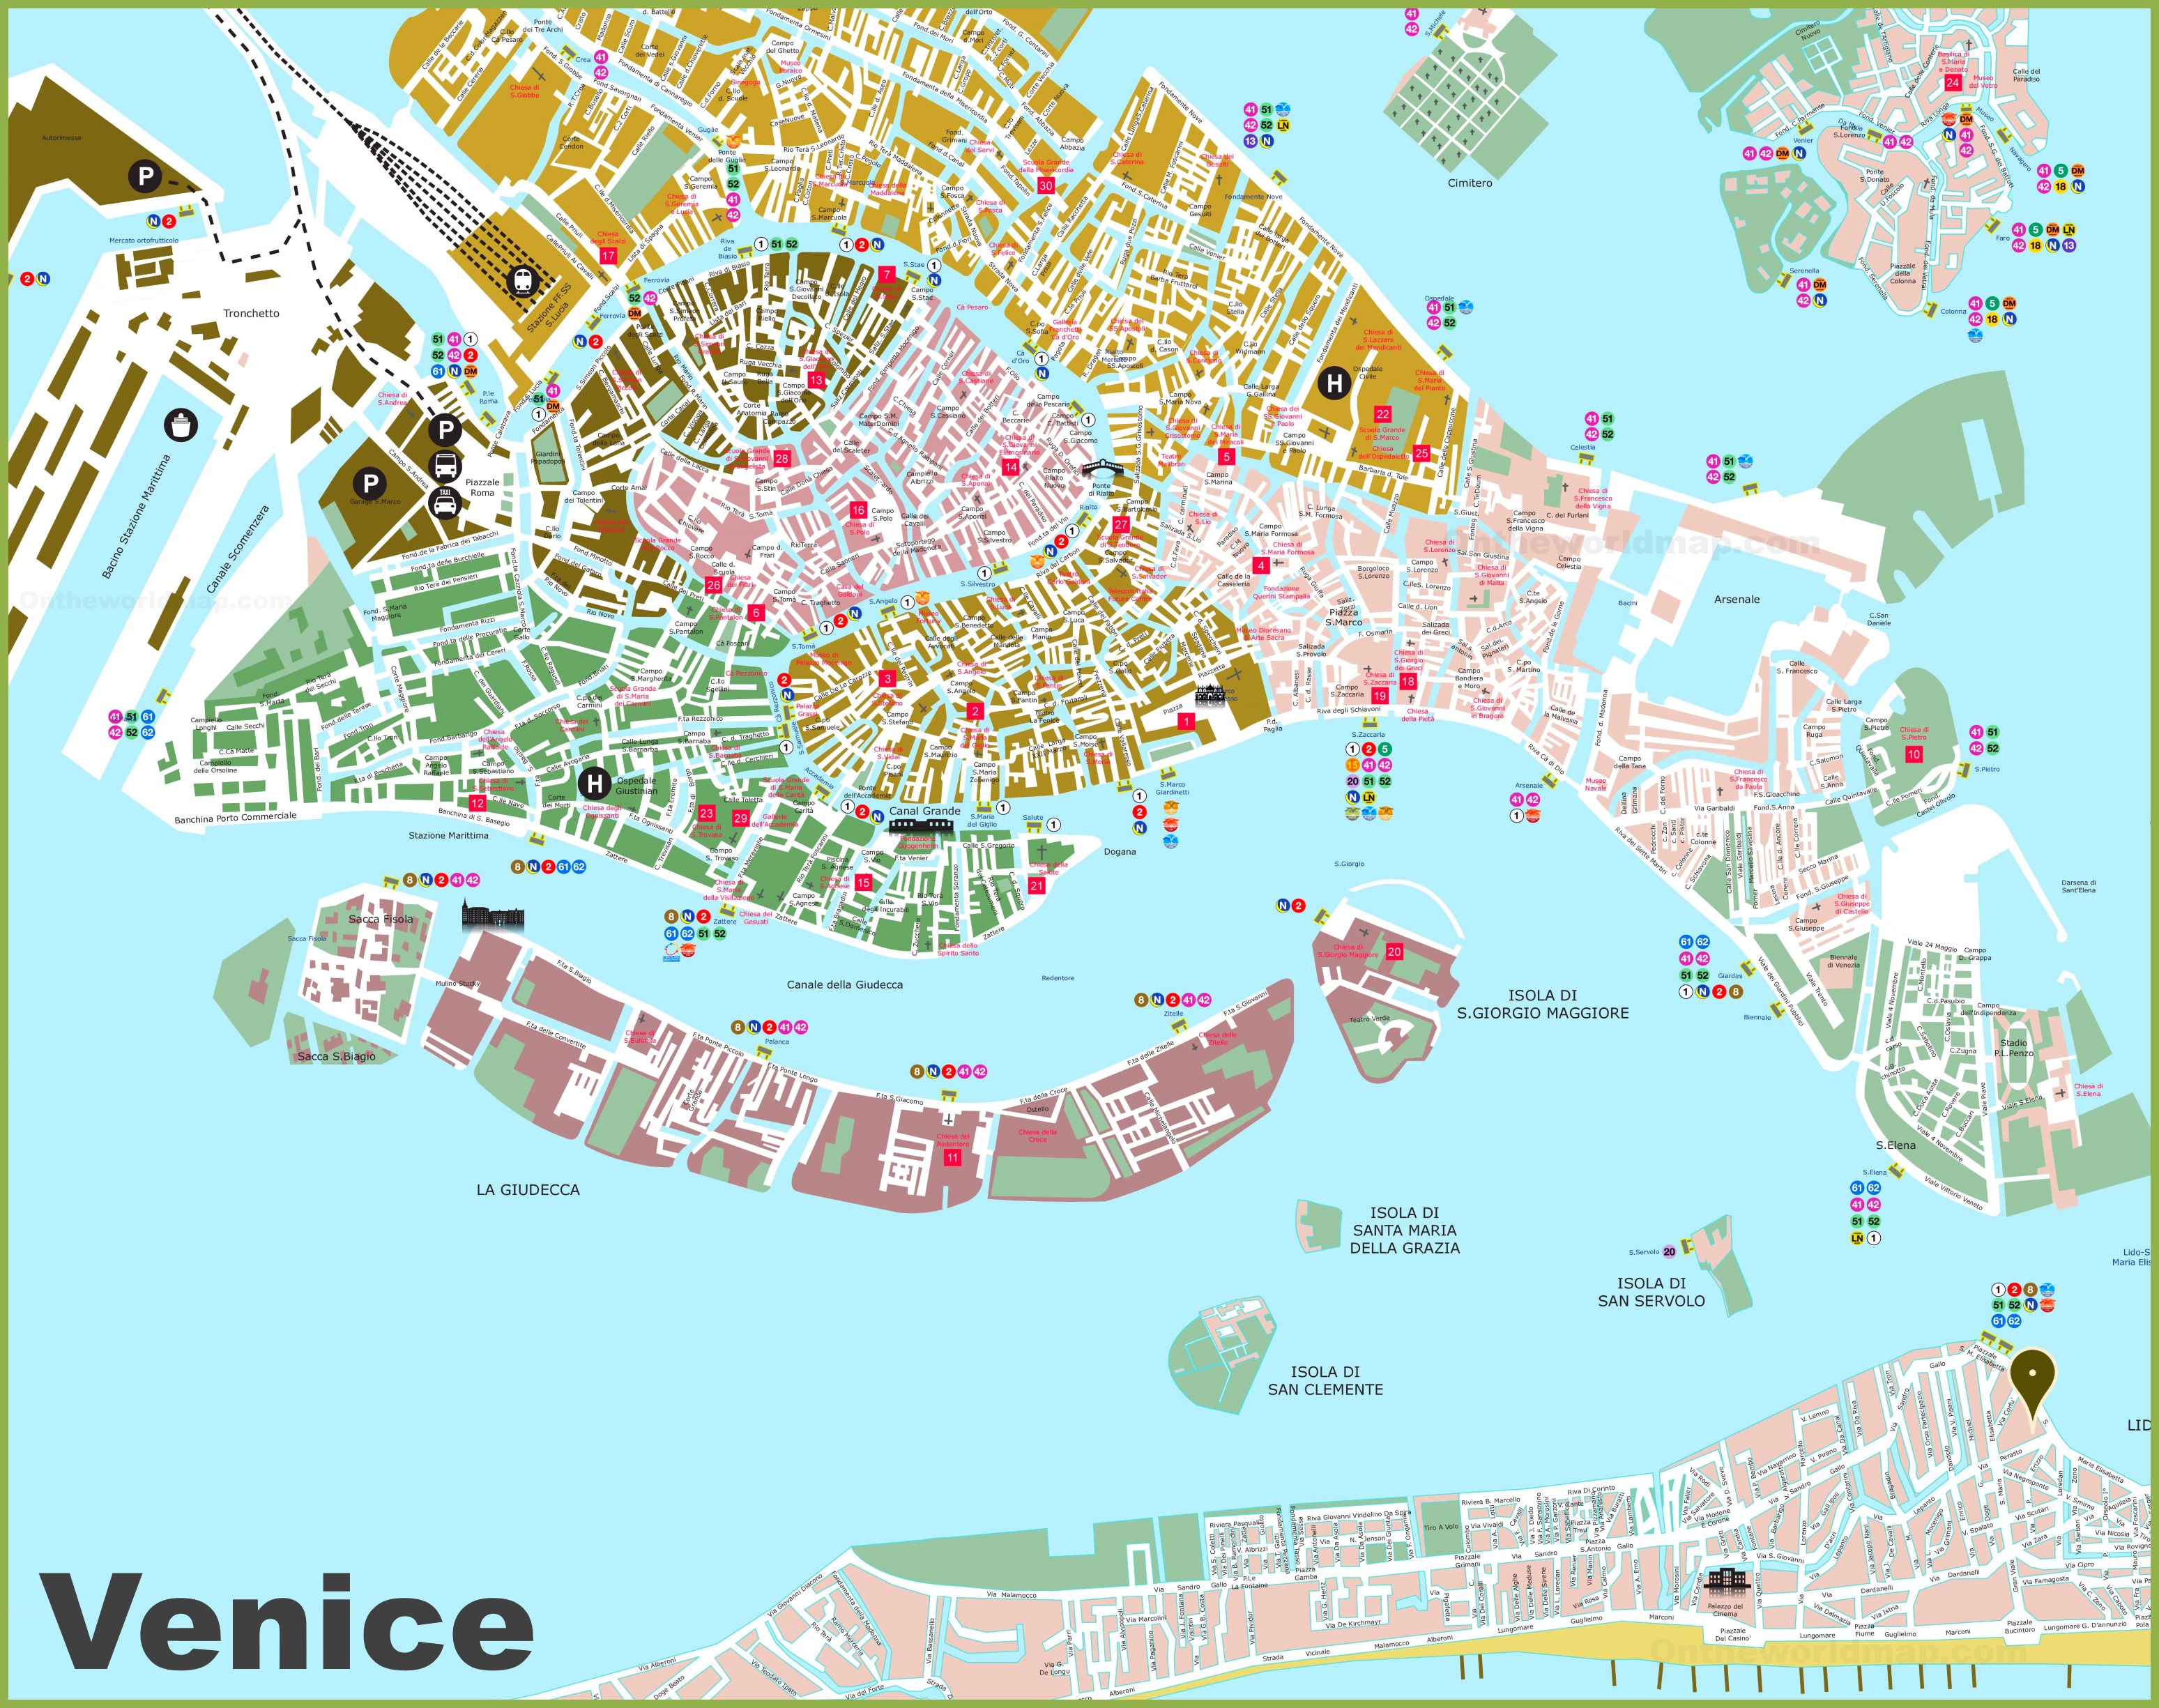 Large Detailed Tourist Map Of Venice Venice Printable Tourist Map